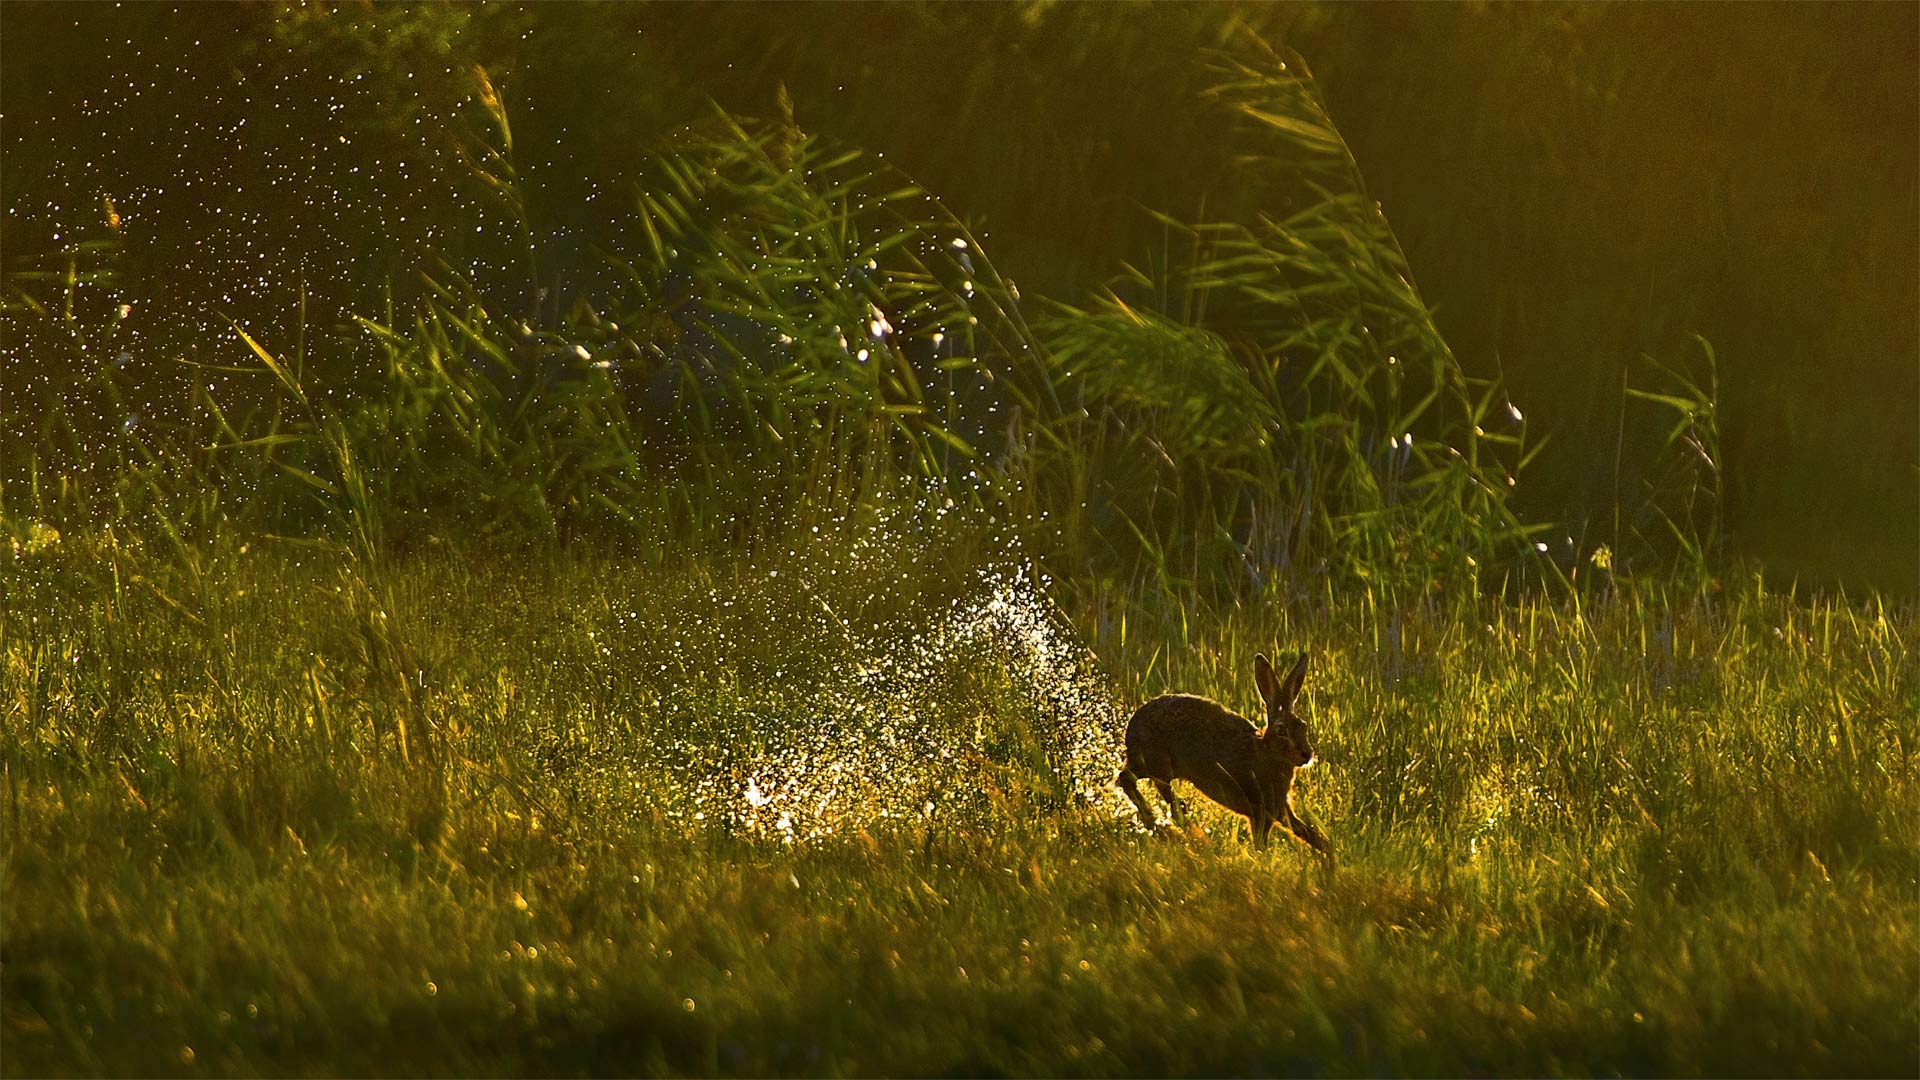 A European hare jumps through a wetland in the Netherlands - Jim Brandenburg